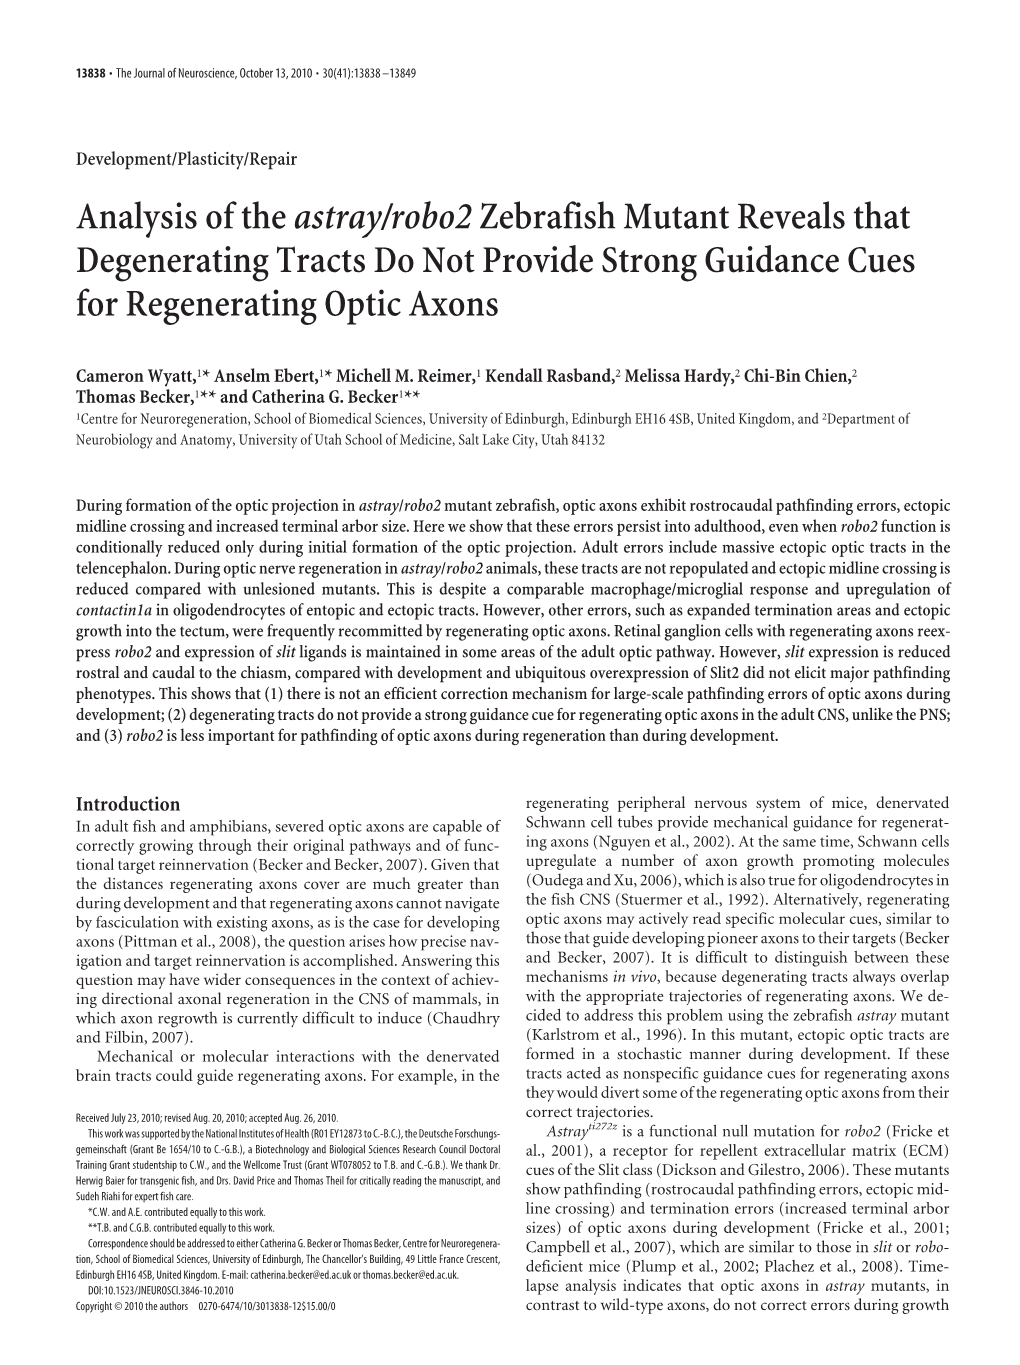 Analysis of Theastray/Robo2zebrafish Mutant Reveals That Degenerating